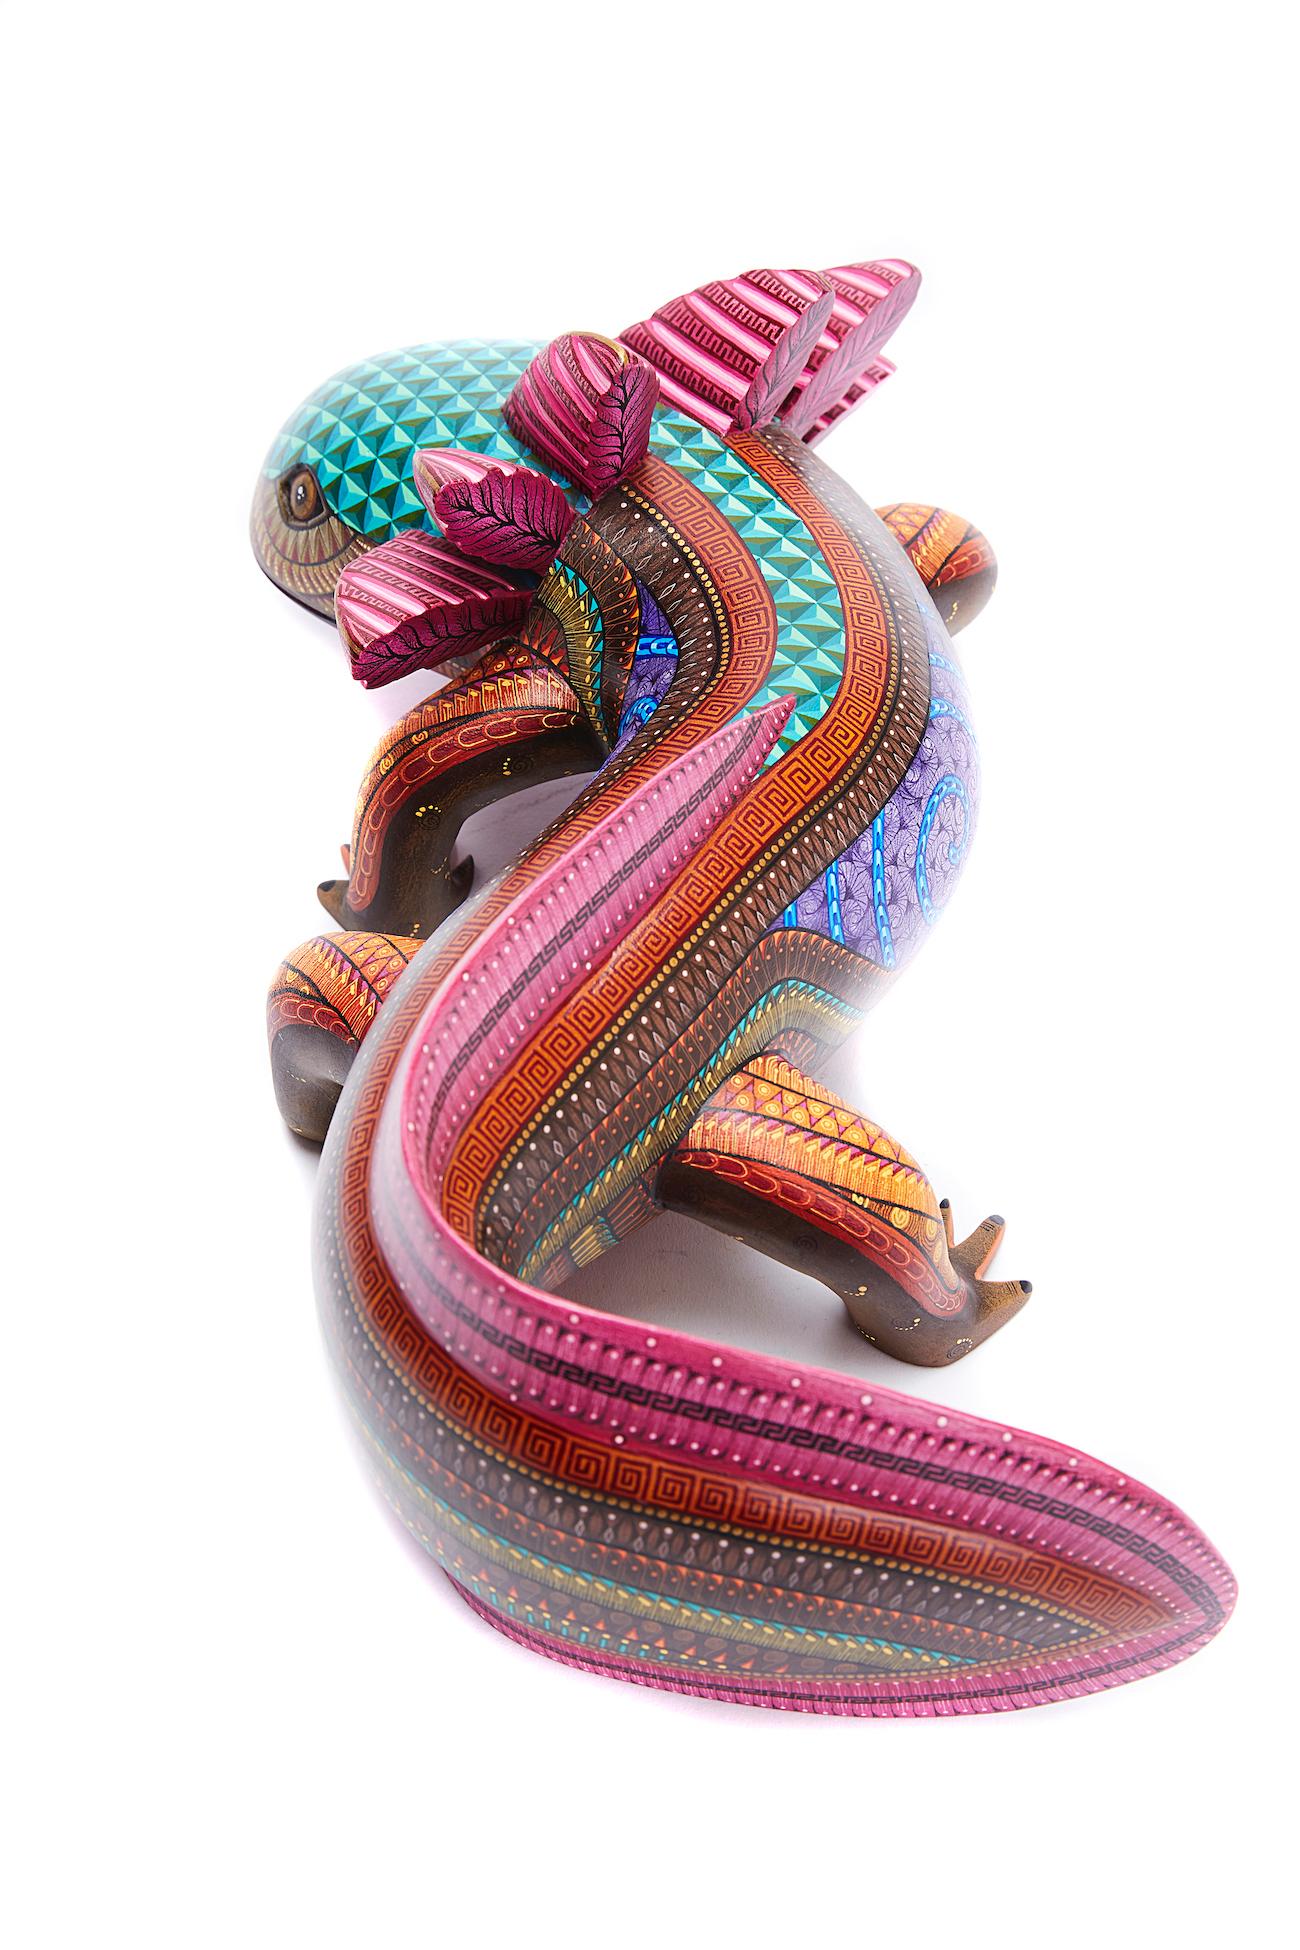 Ajolote - Axolotl - Mexican Folk Art  Cactus Fine Art 12